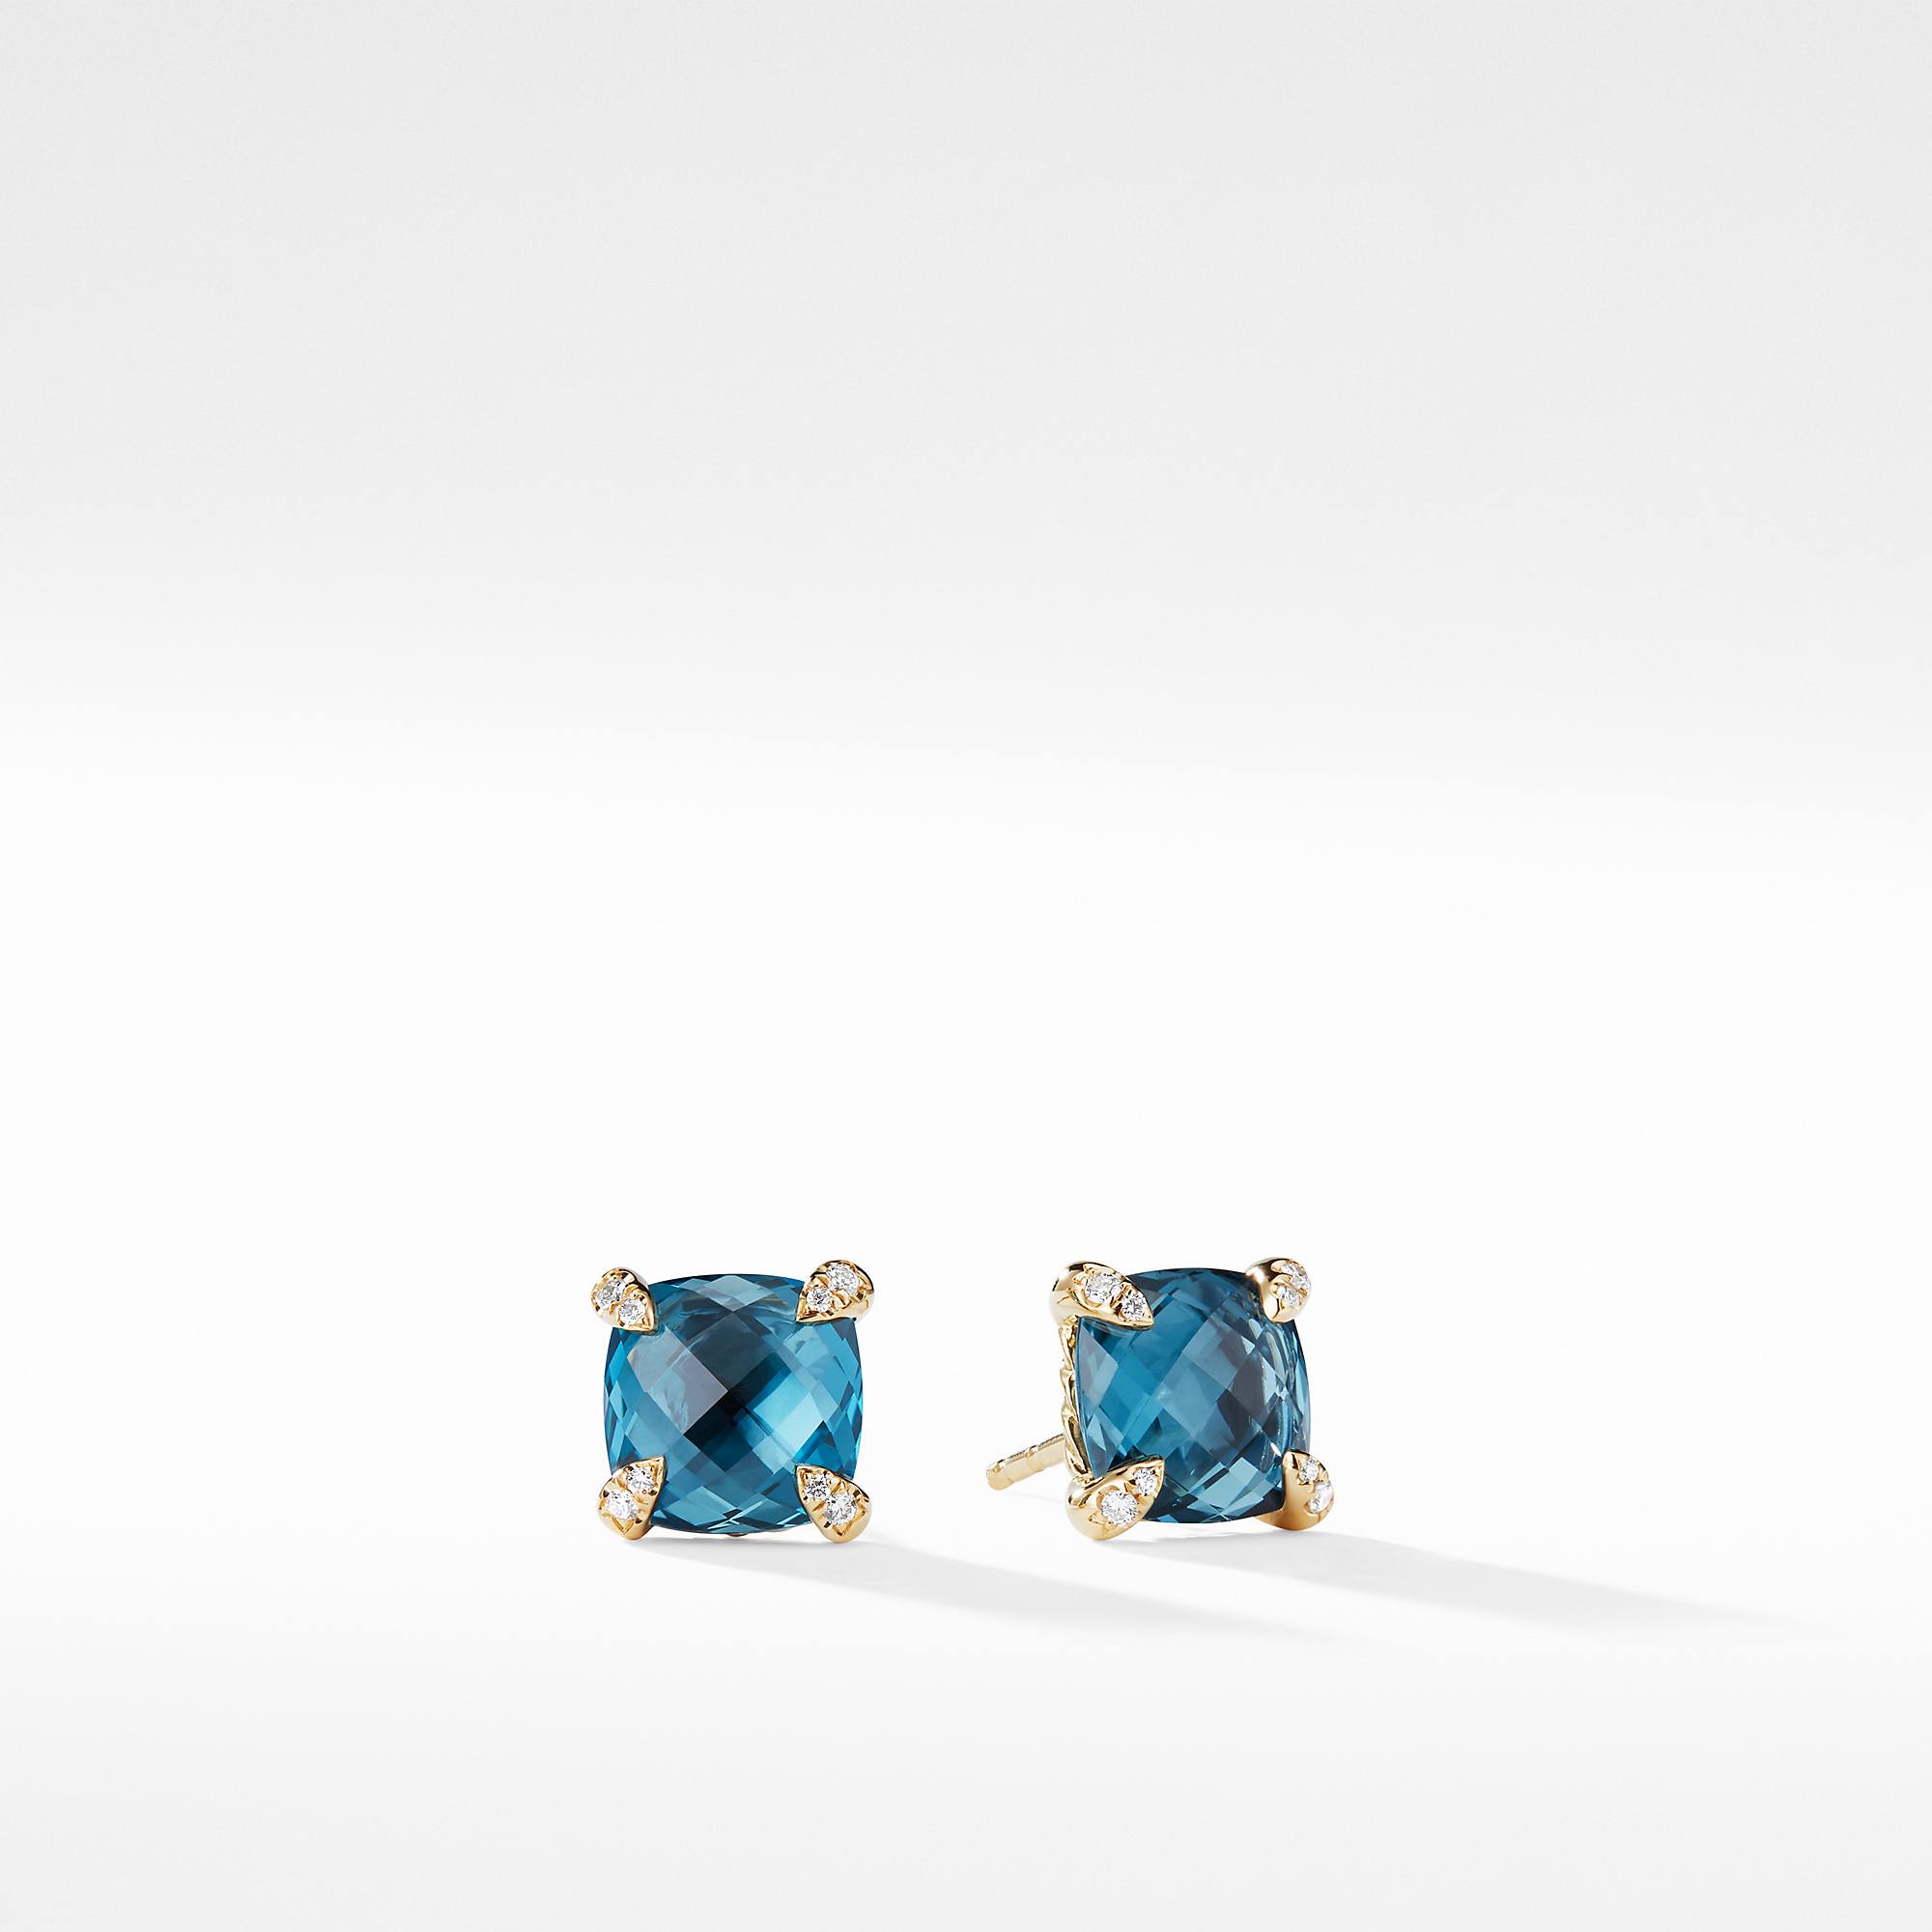 David Yurman Chatelaine Earrings with Hampton Blue Topaz in 18K Gold 0